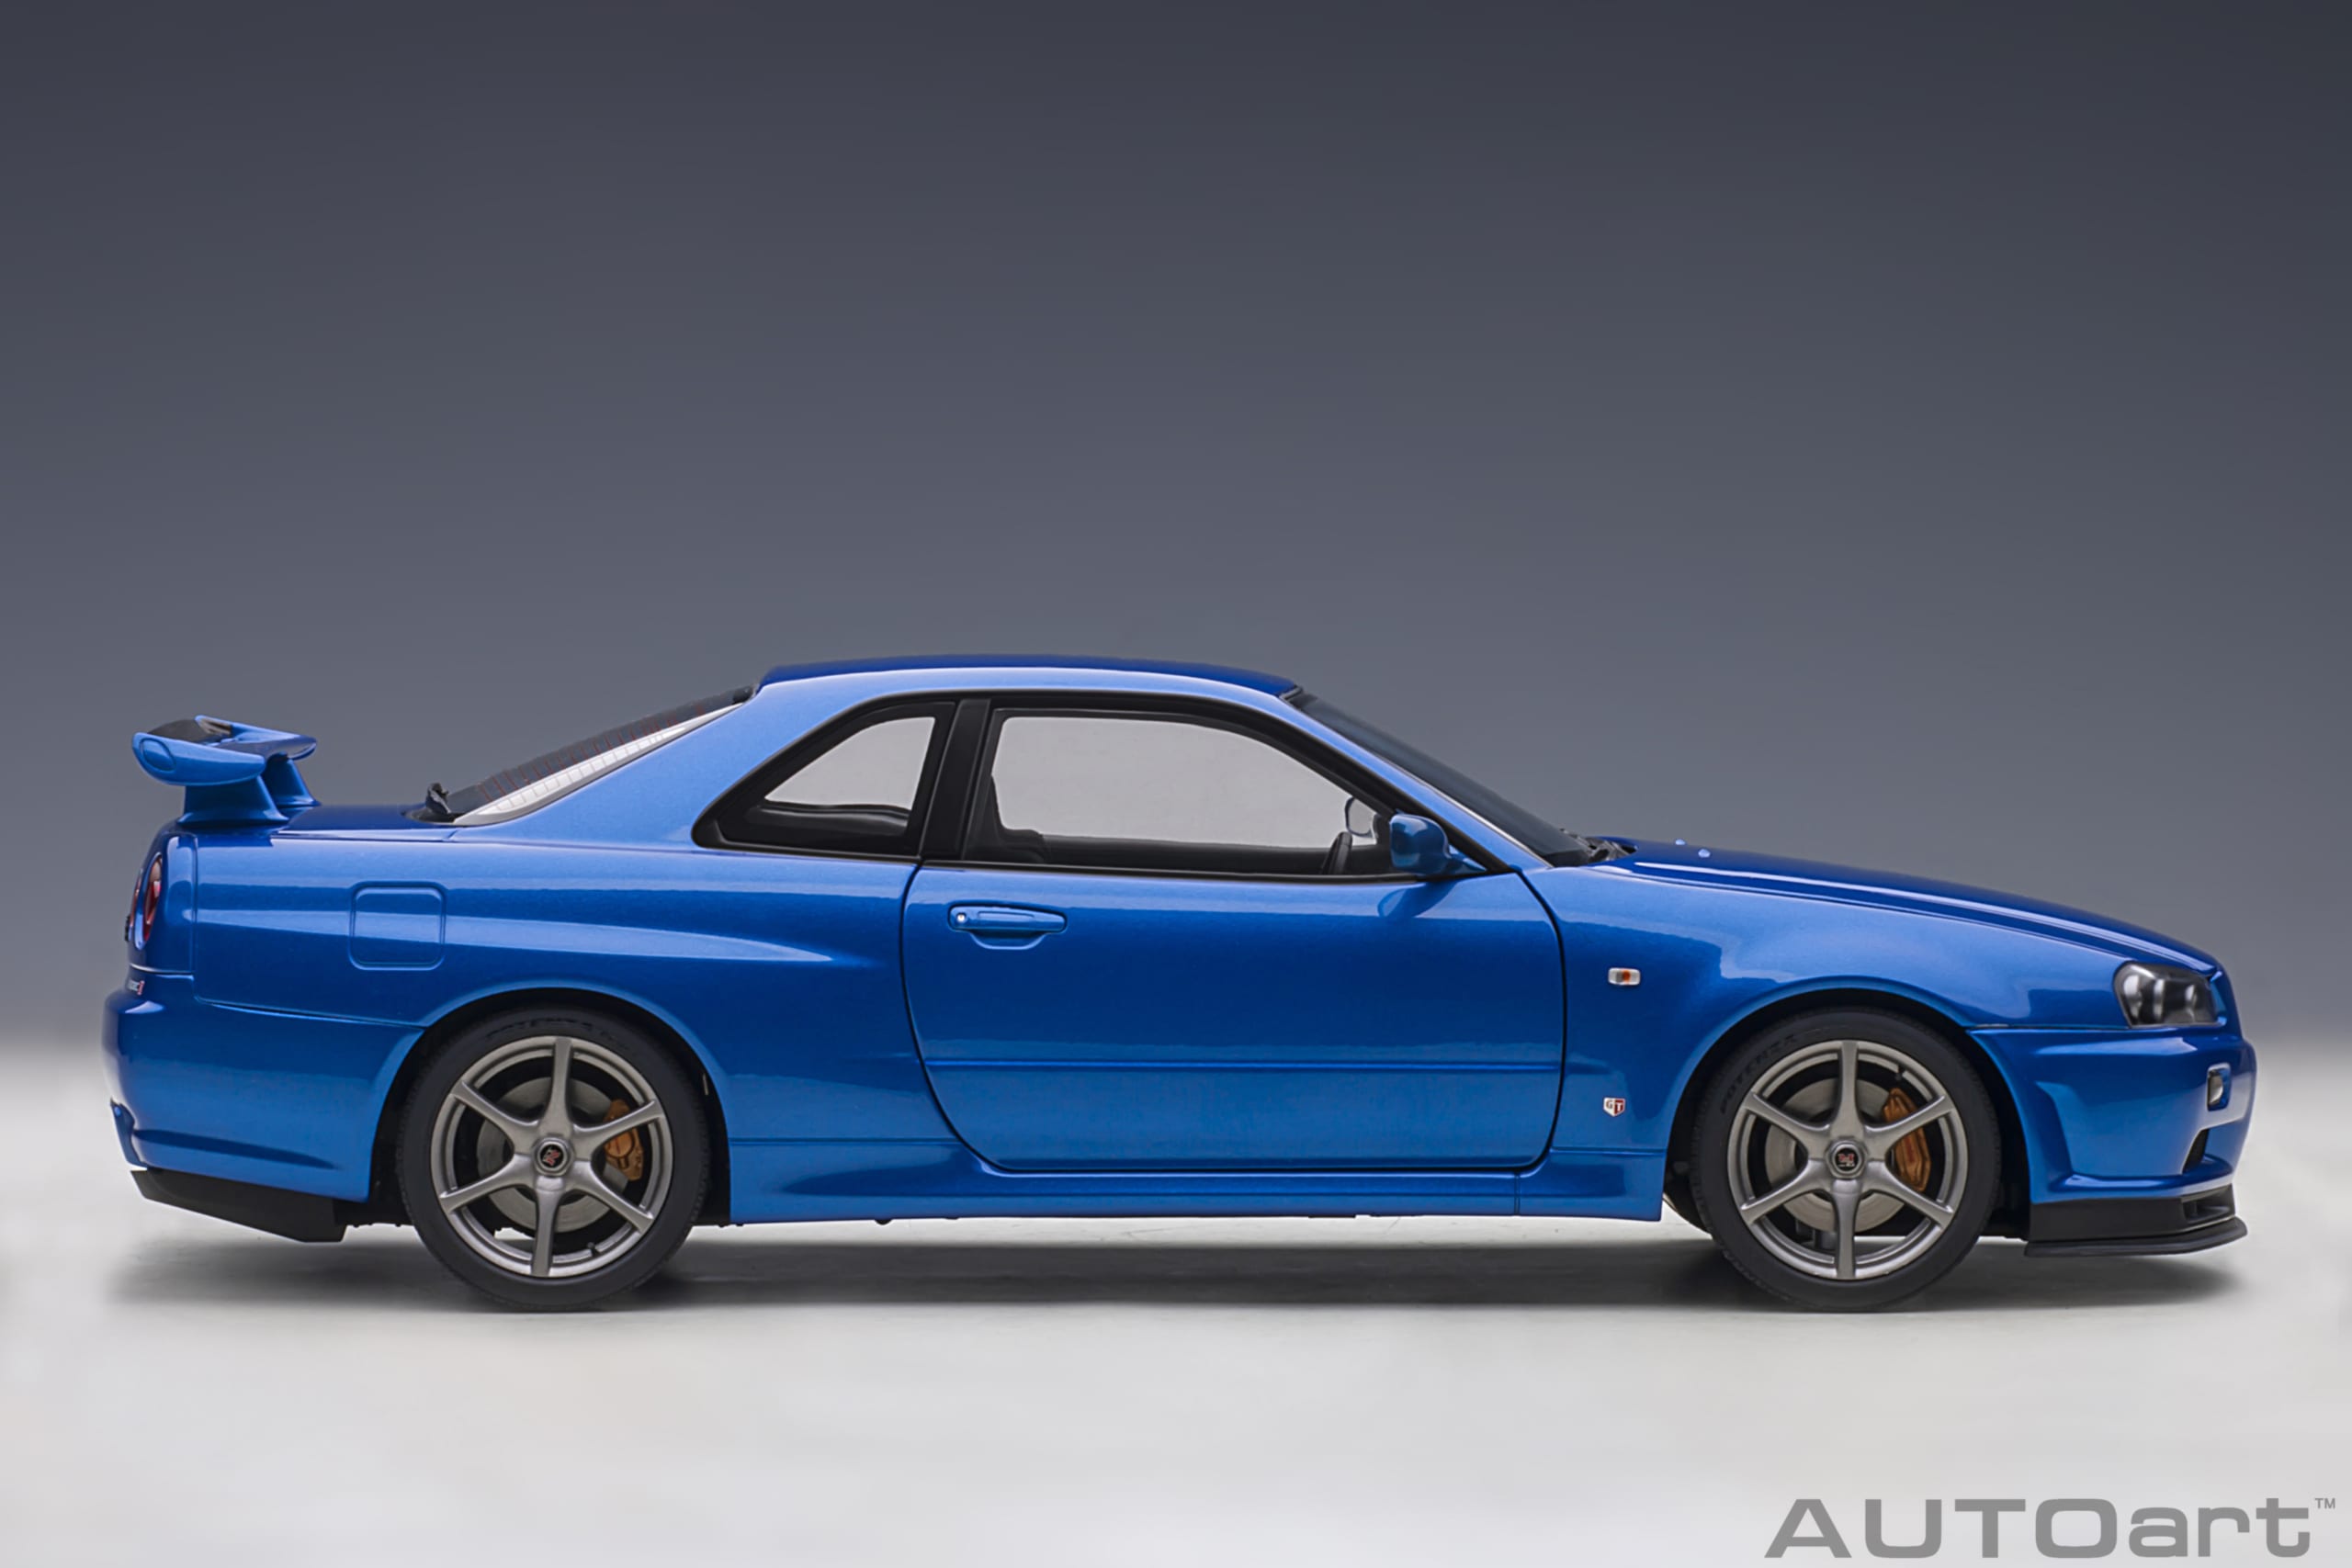 Nissan Skyline GT-R (R34) V-spec II (Bayside Blue) | AUTOart